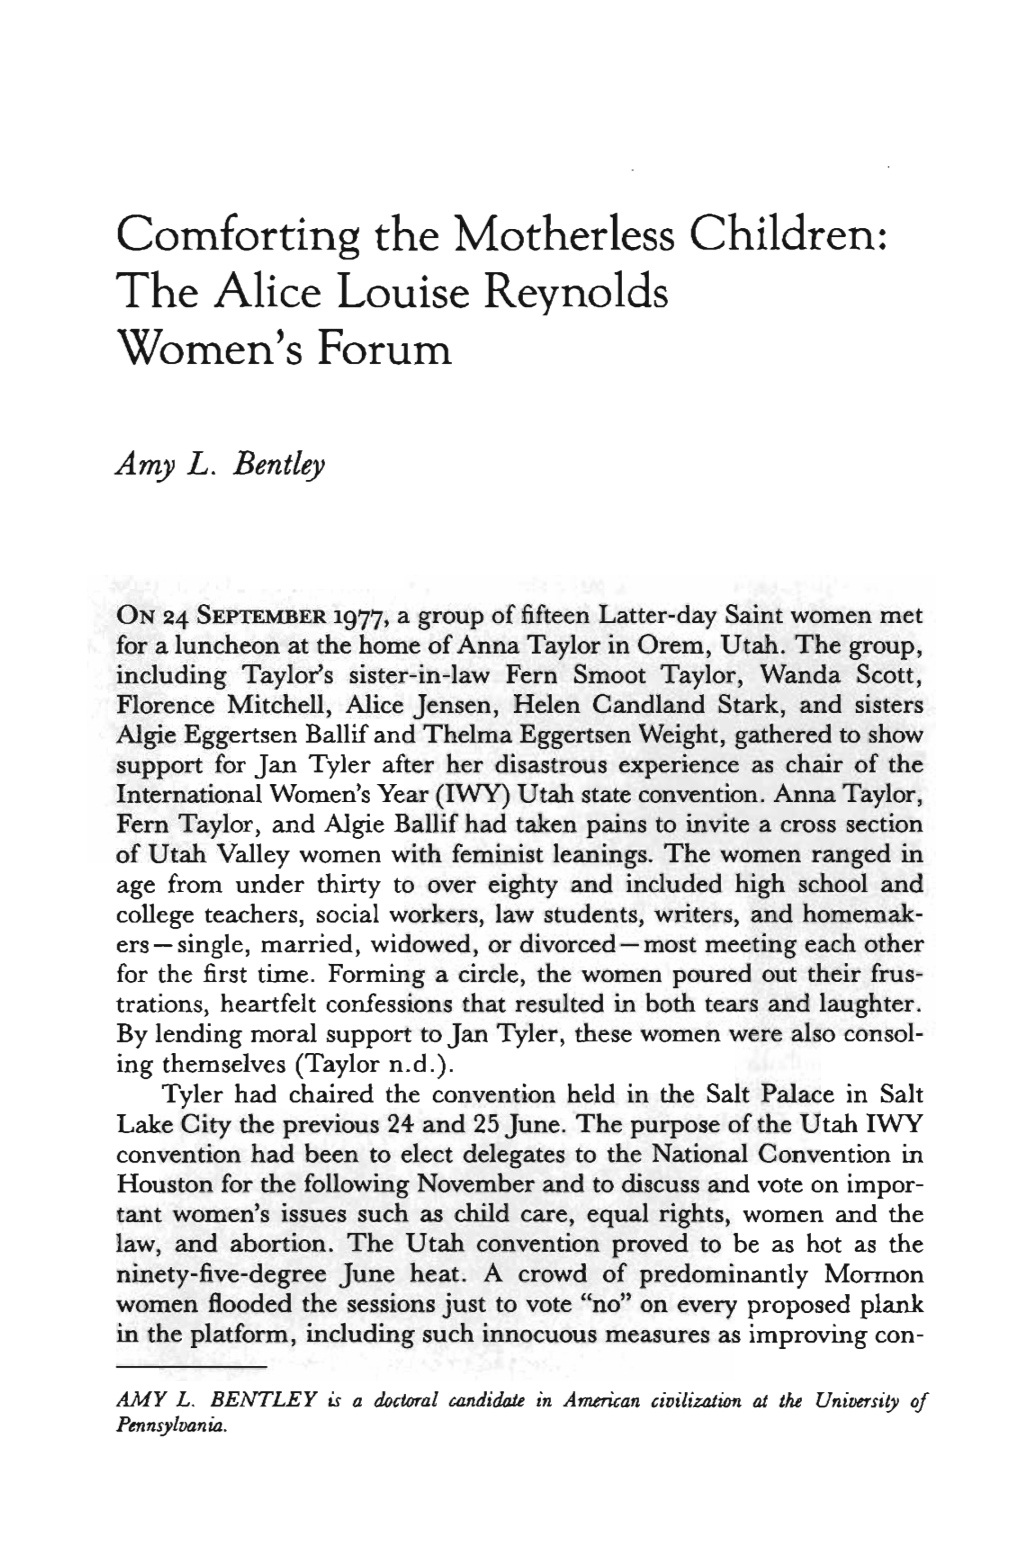 The Alice Louise Reynolds Women's Forum